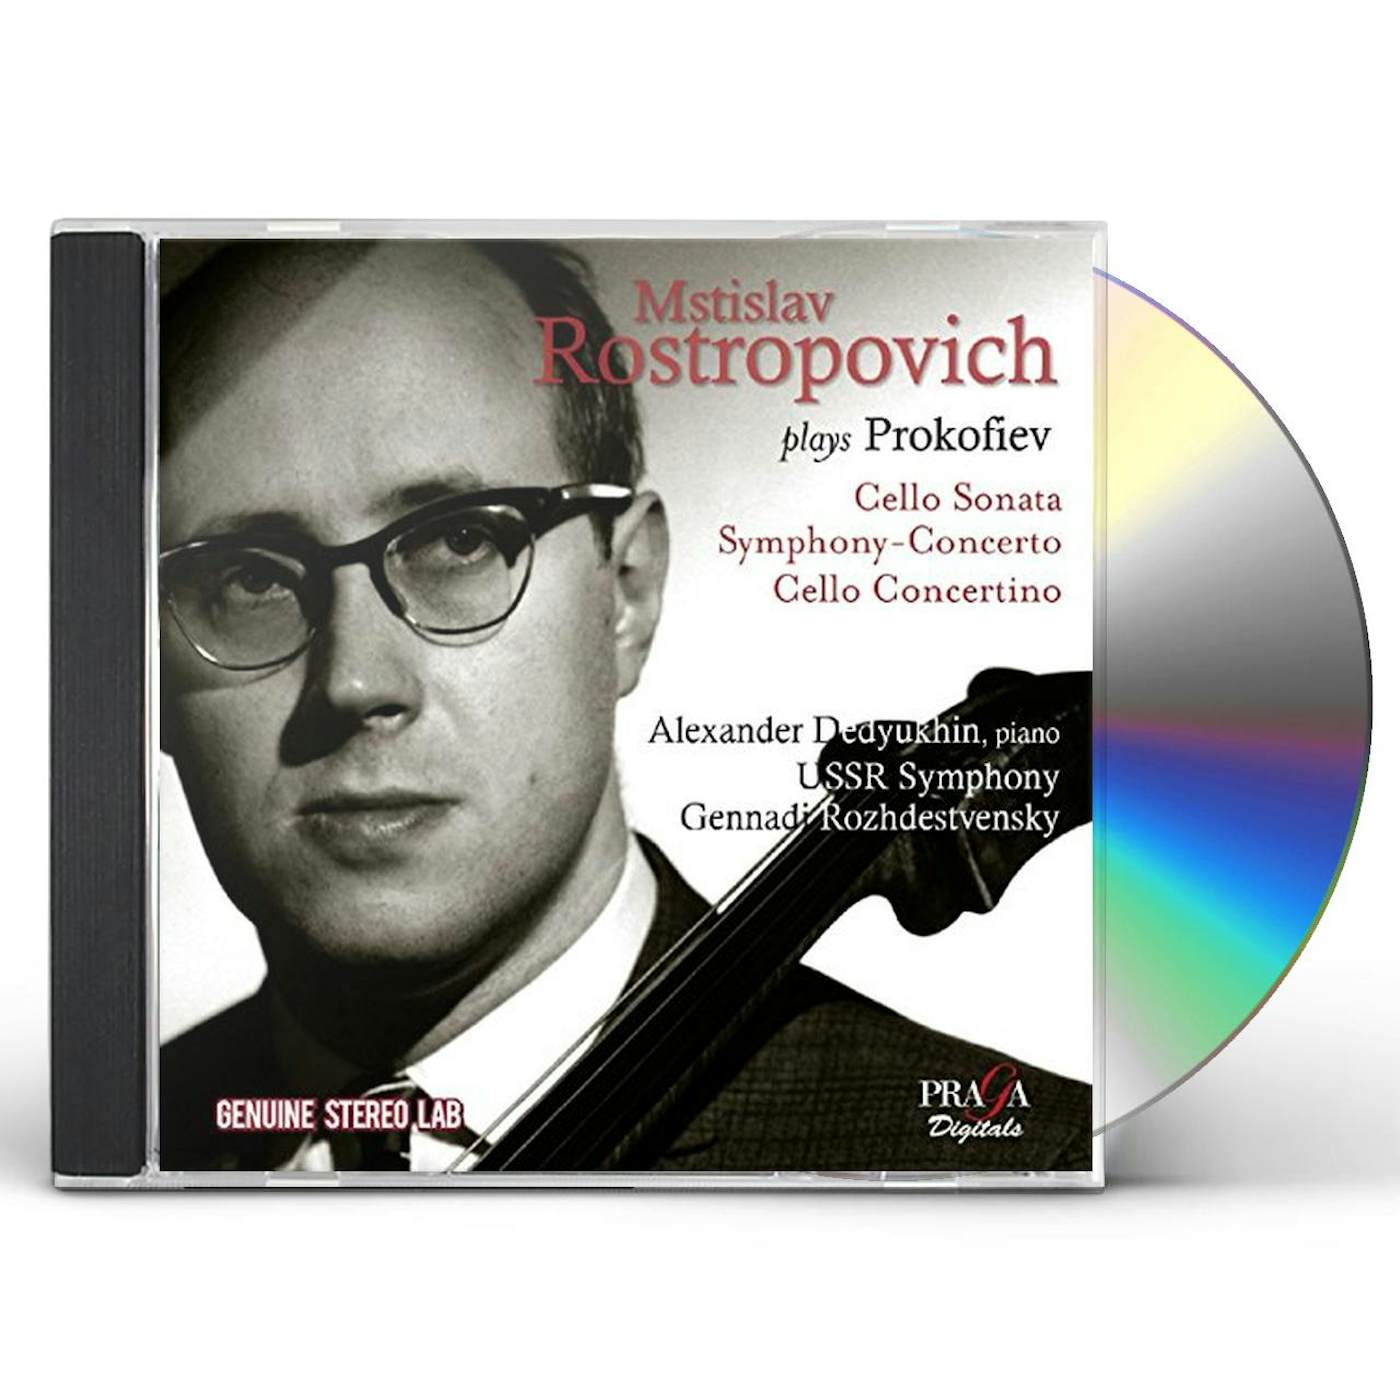 MSTISLAV ROSTROPOVICH PLAYS PROKOFIEV CD